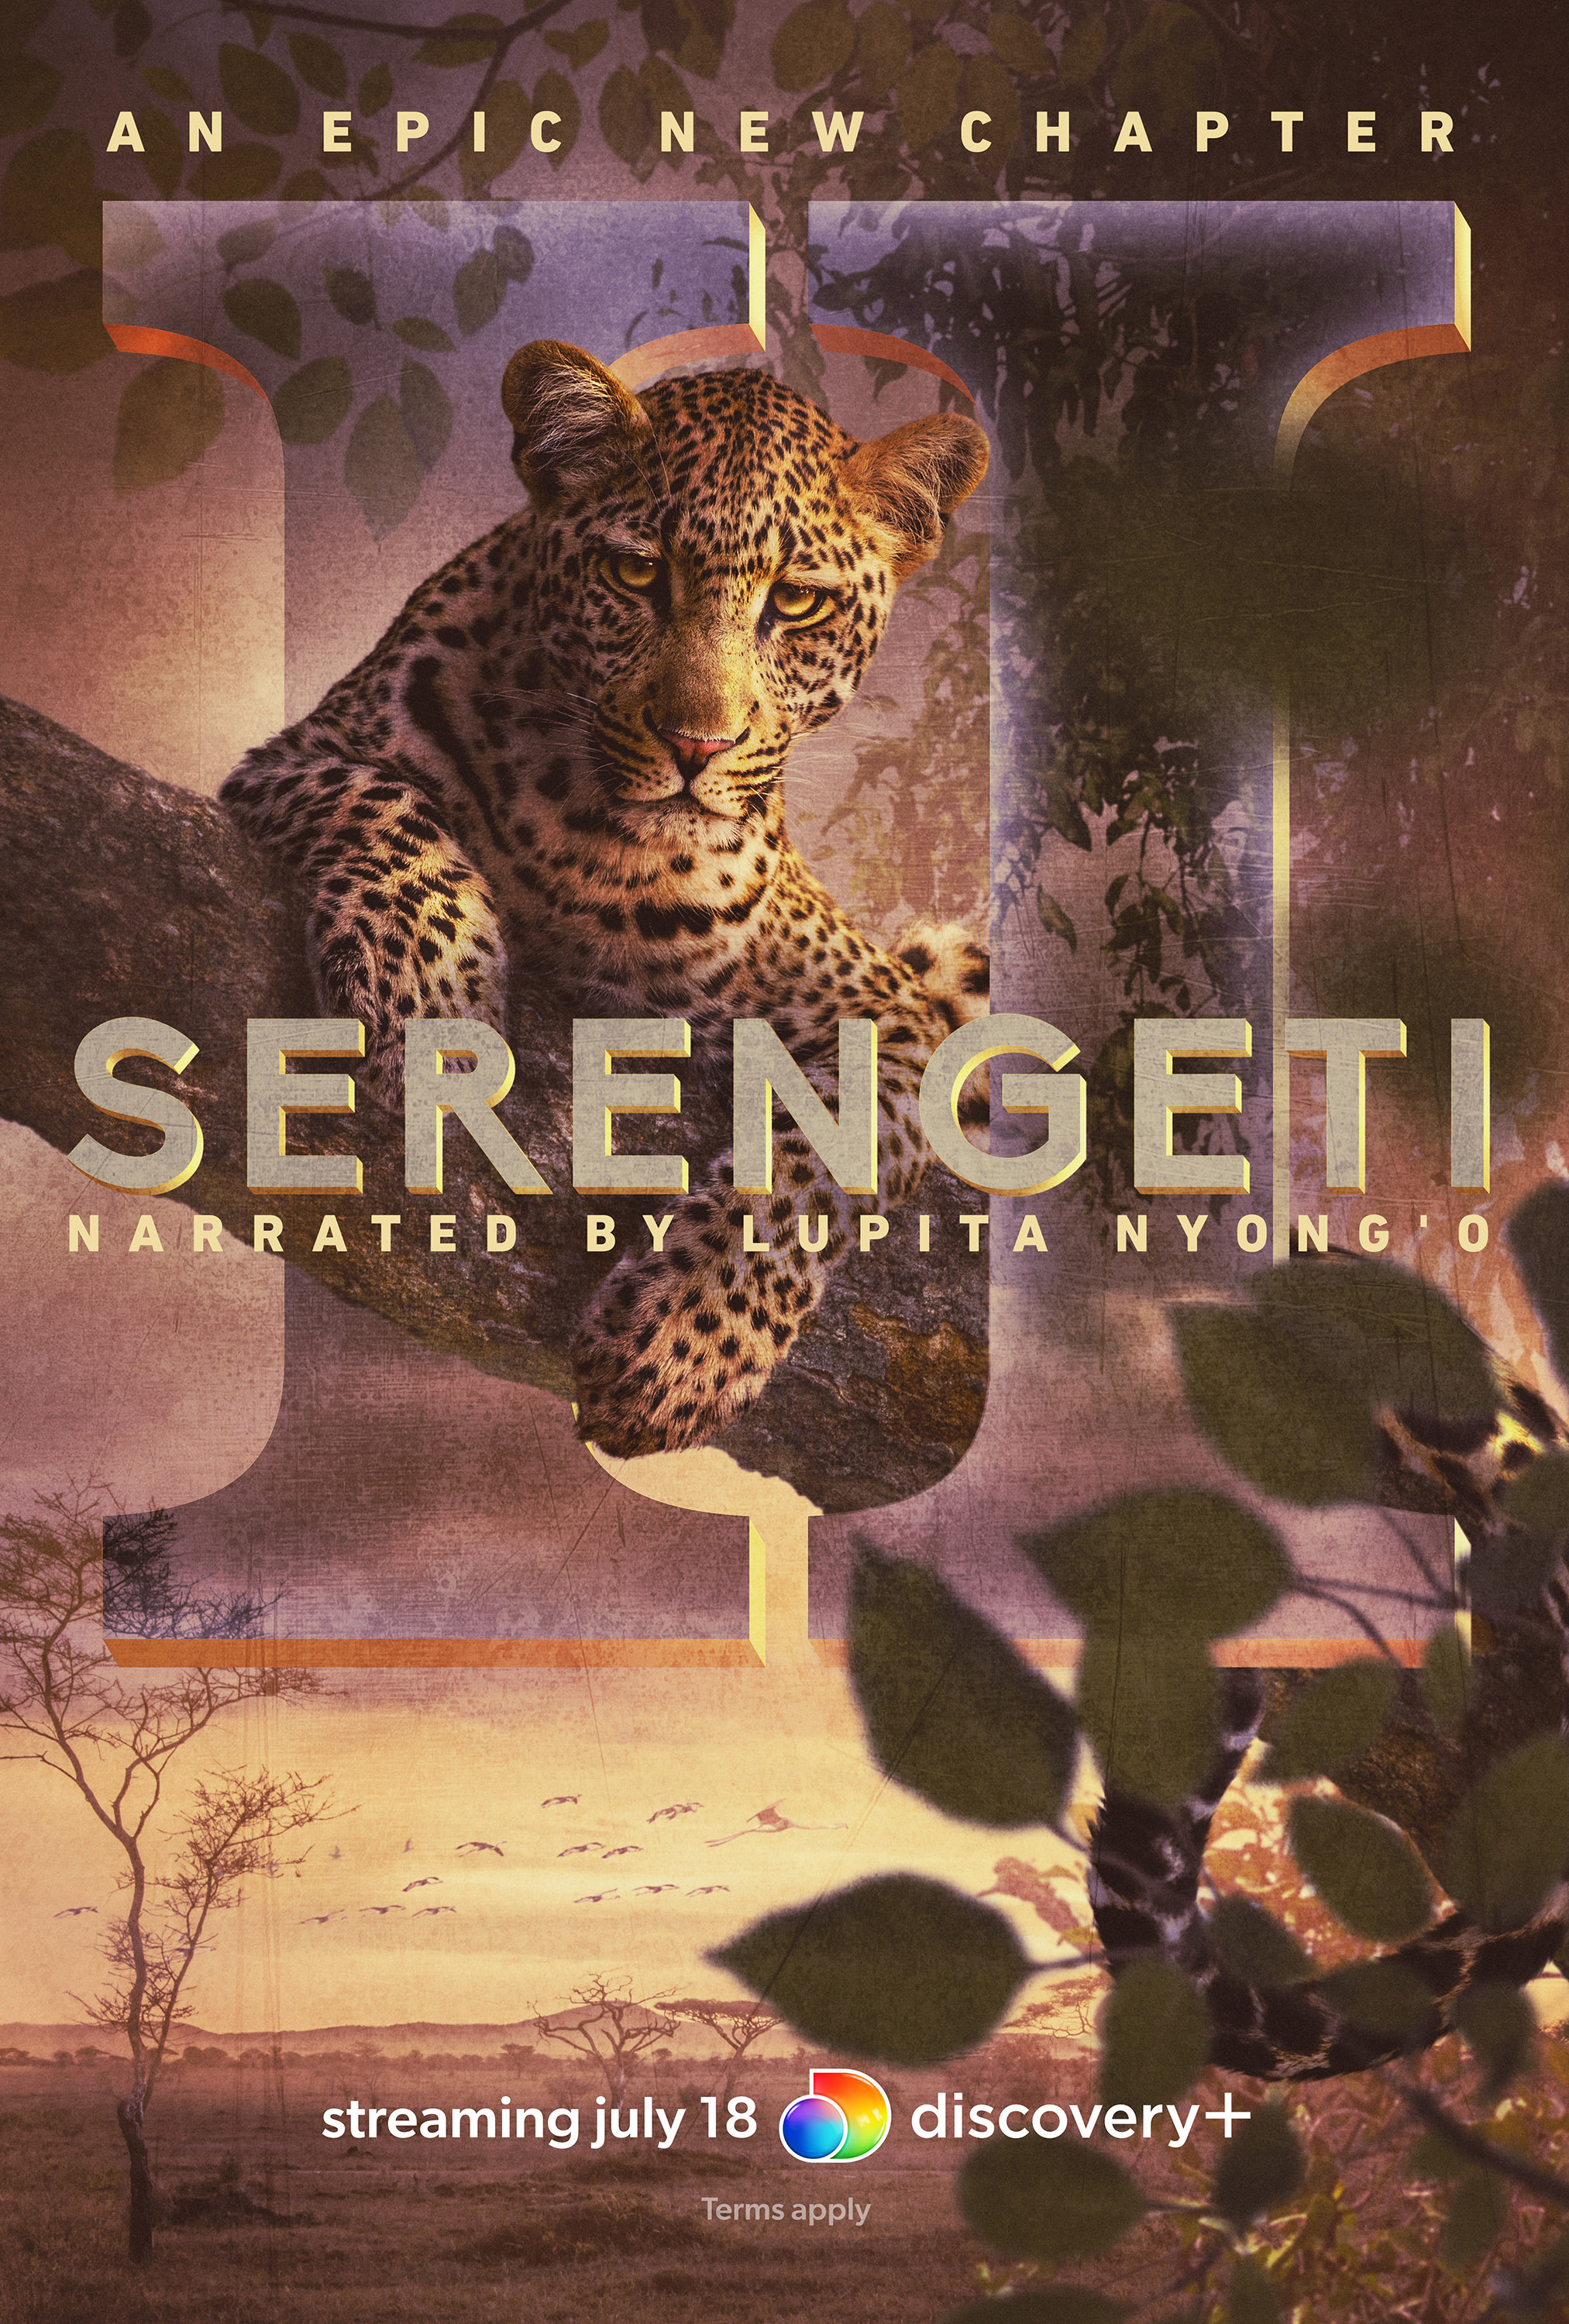 Mega Sized TV Poster Image for Serengeti (#6 of 8)